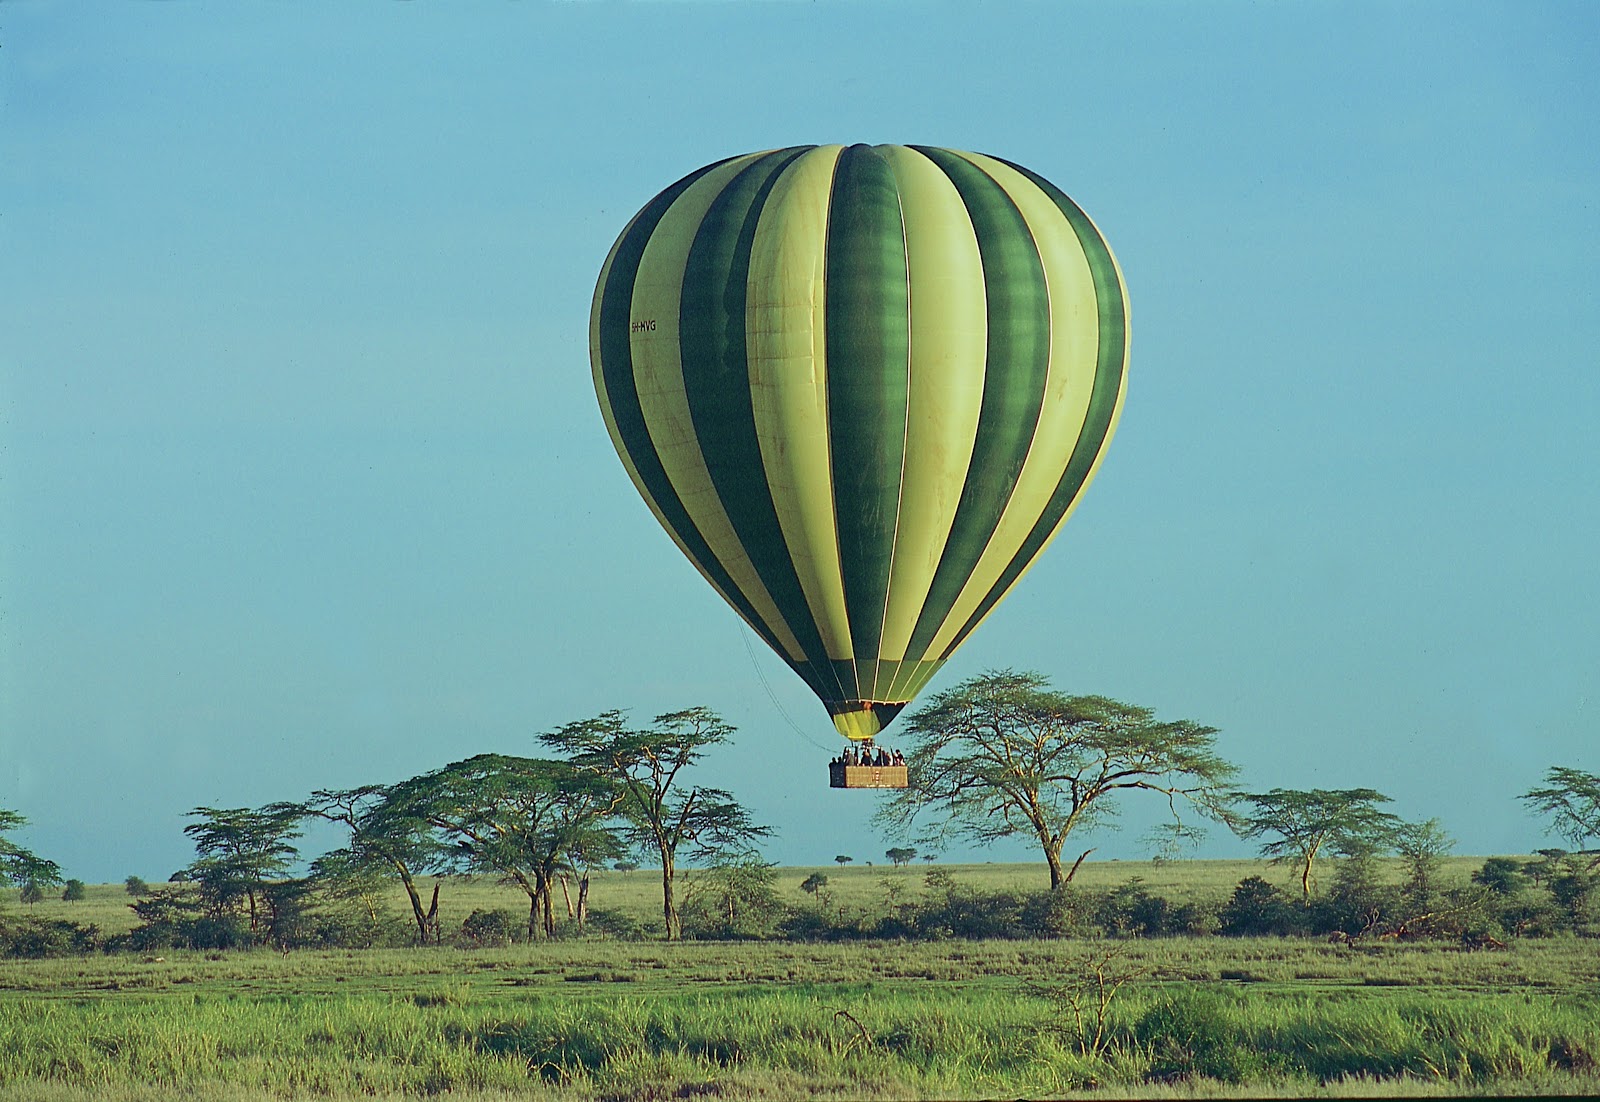 Enjoy a hot air balloon ride as you savor beautiful East Africa.